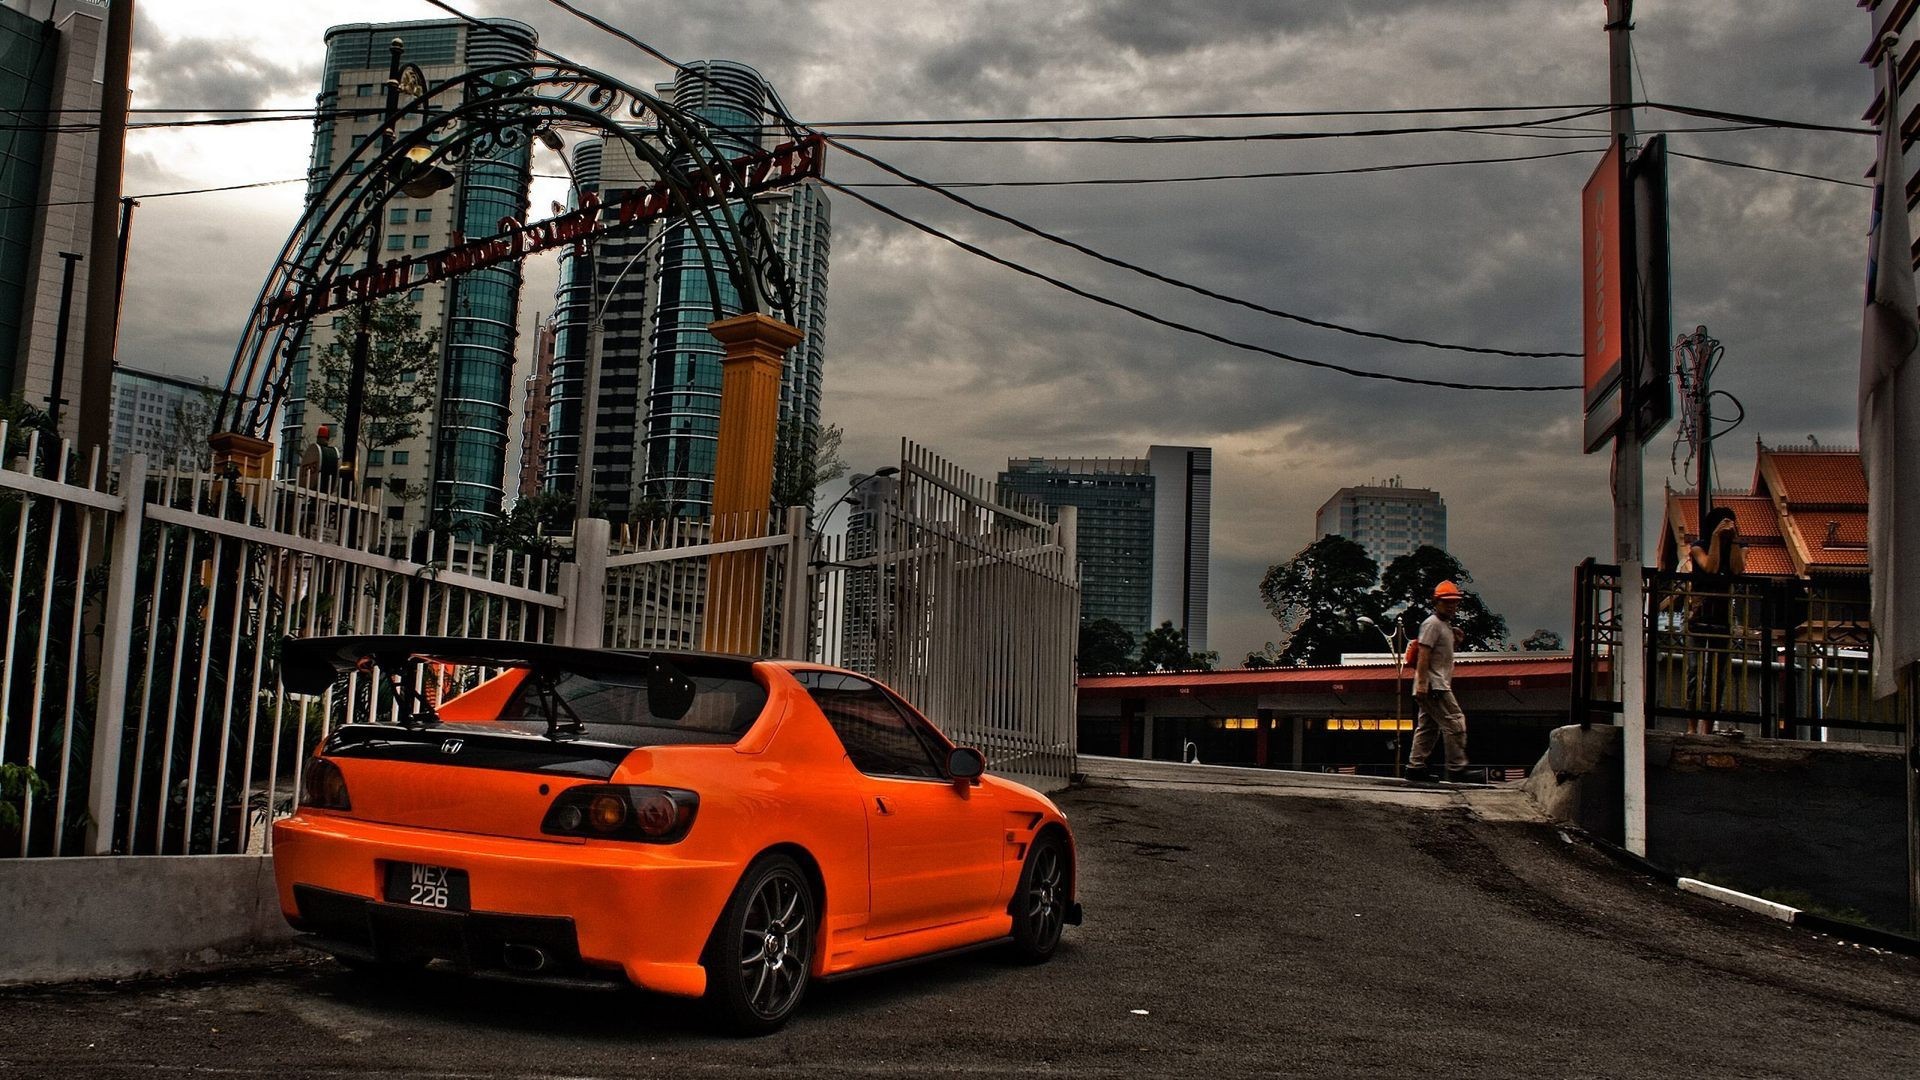 Zastaki.com - Оранжевая Хонда припаркована в городе